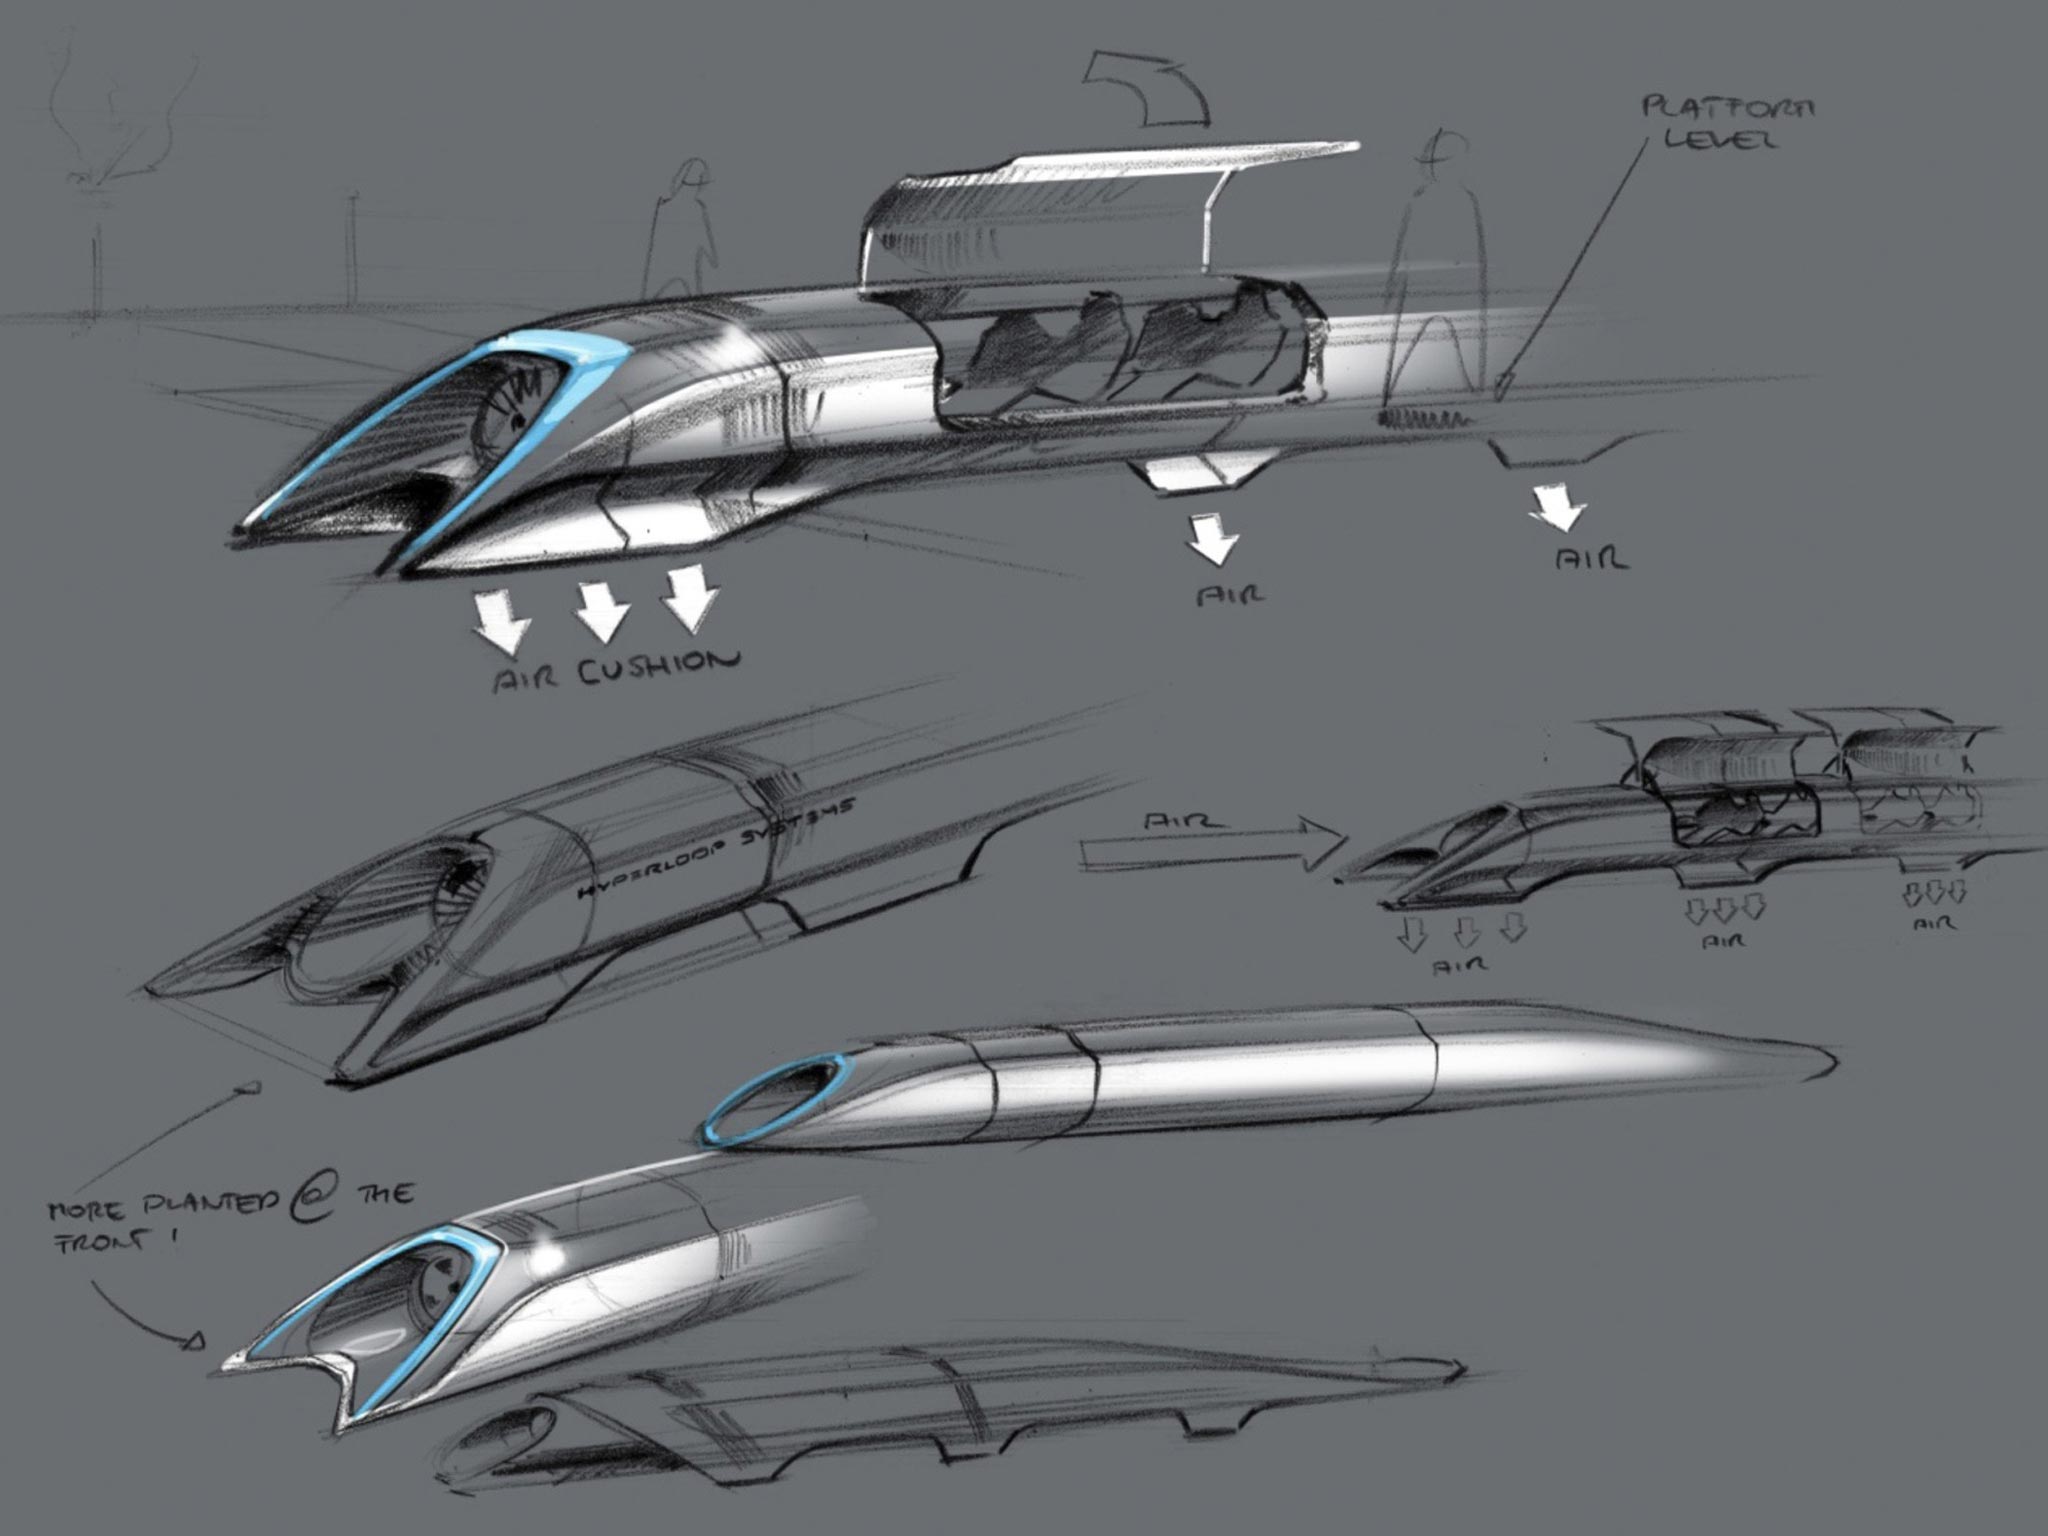 A sketch of Elon Musk's proposed "Hyperloop" transport system